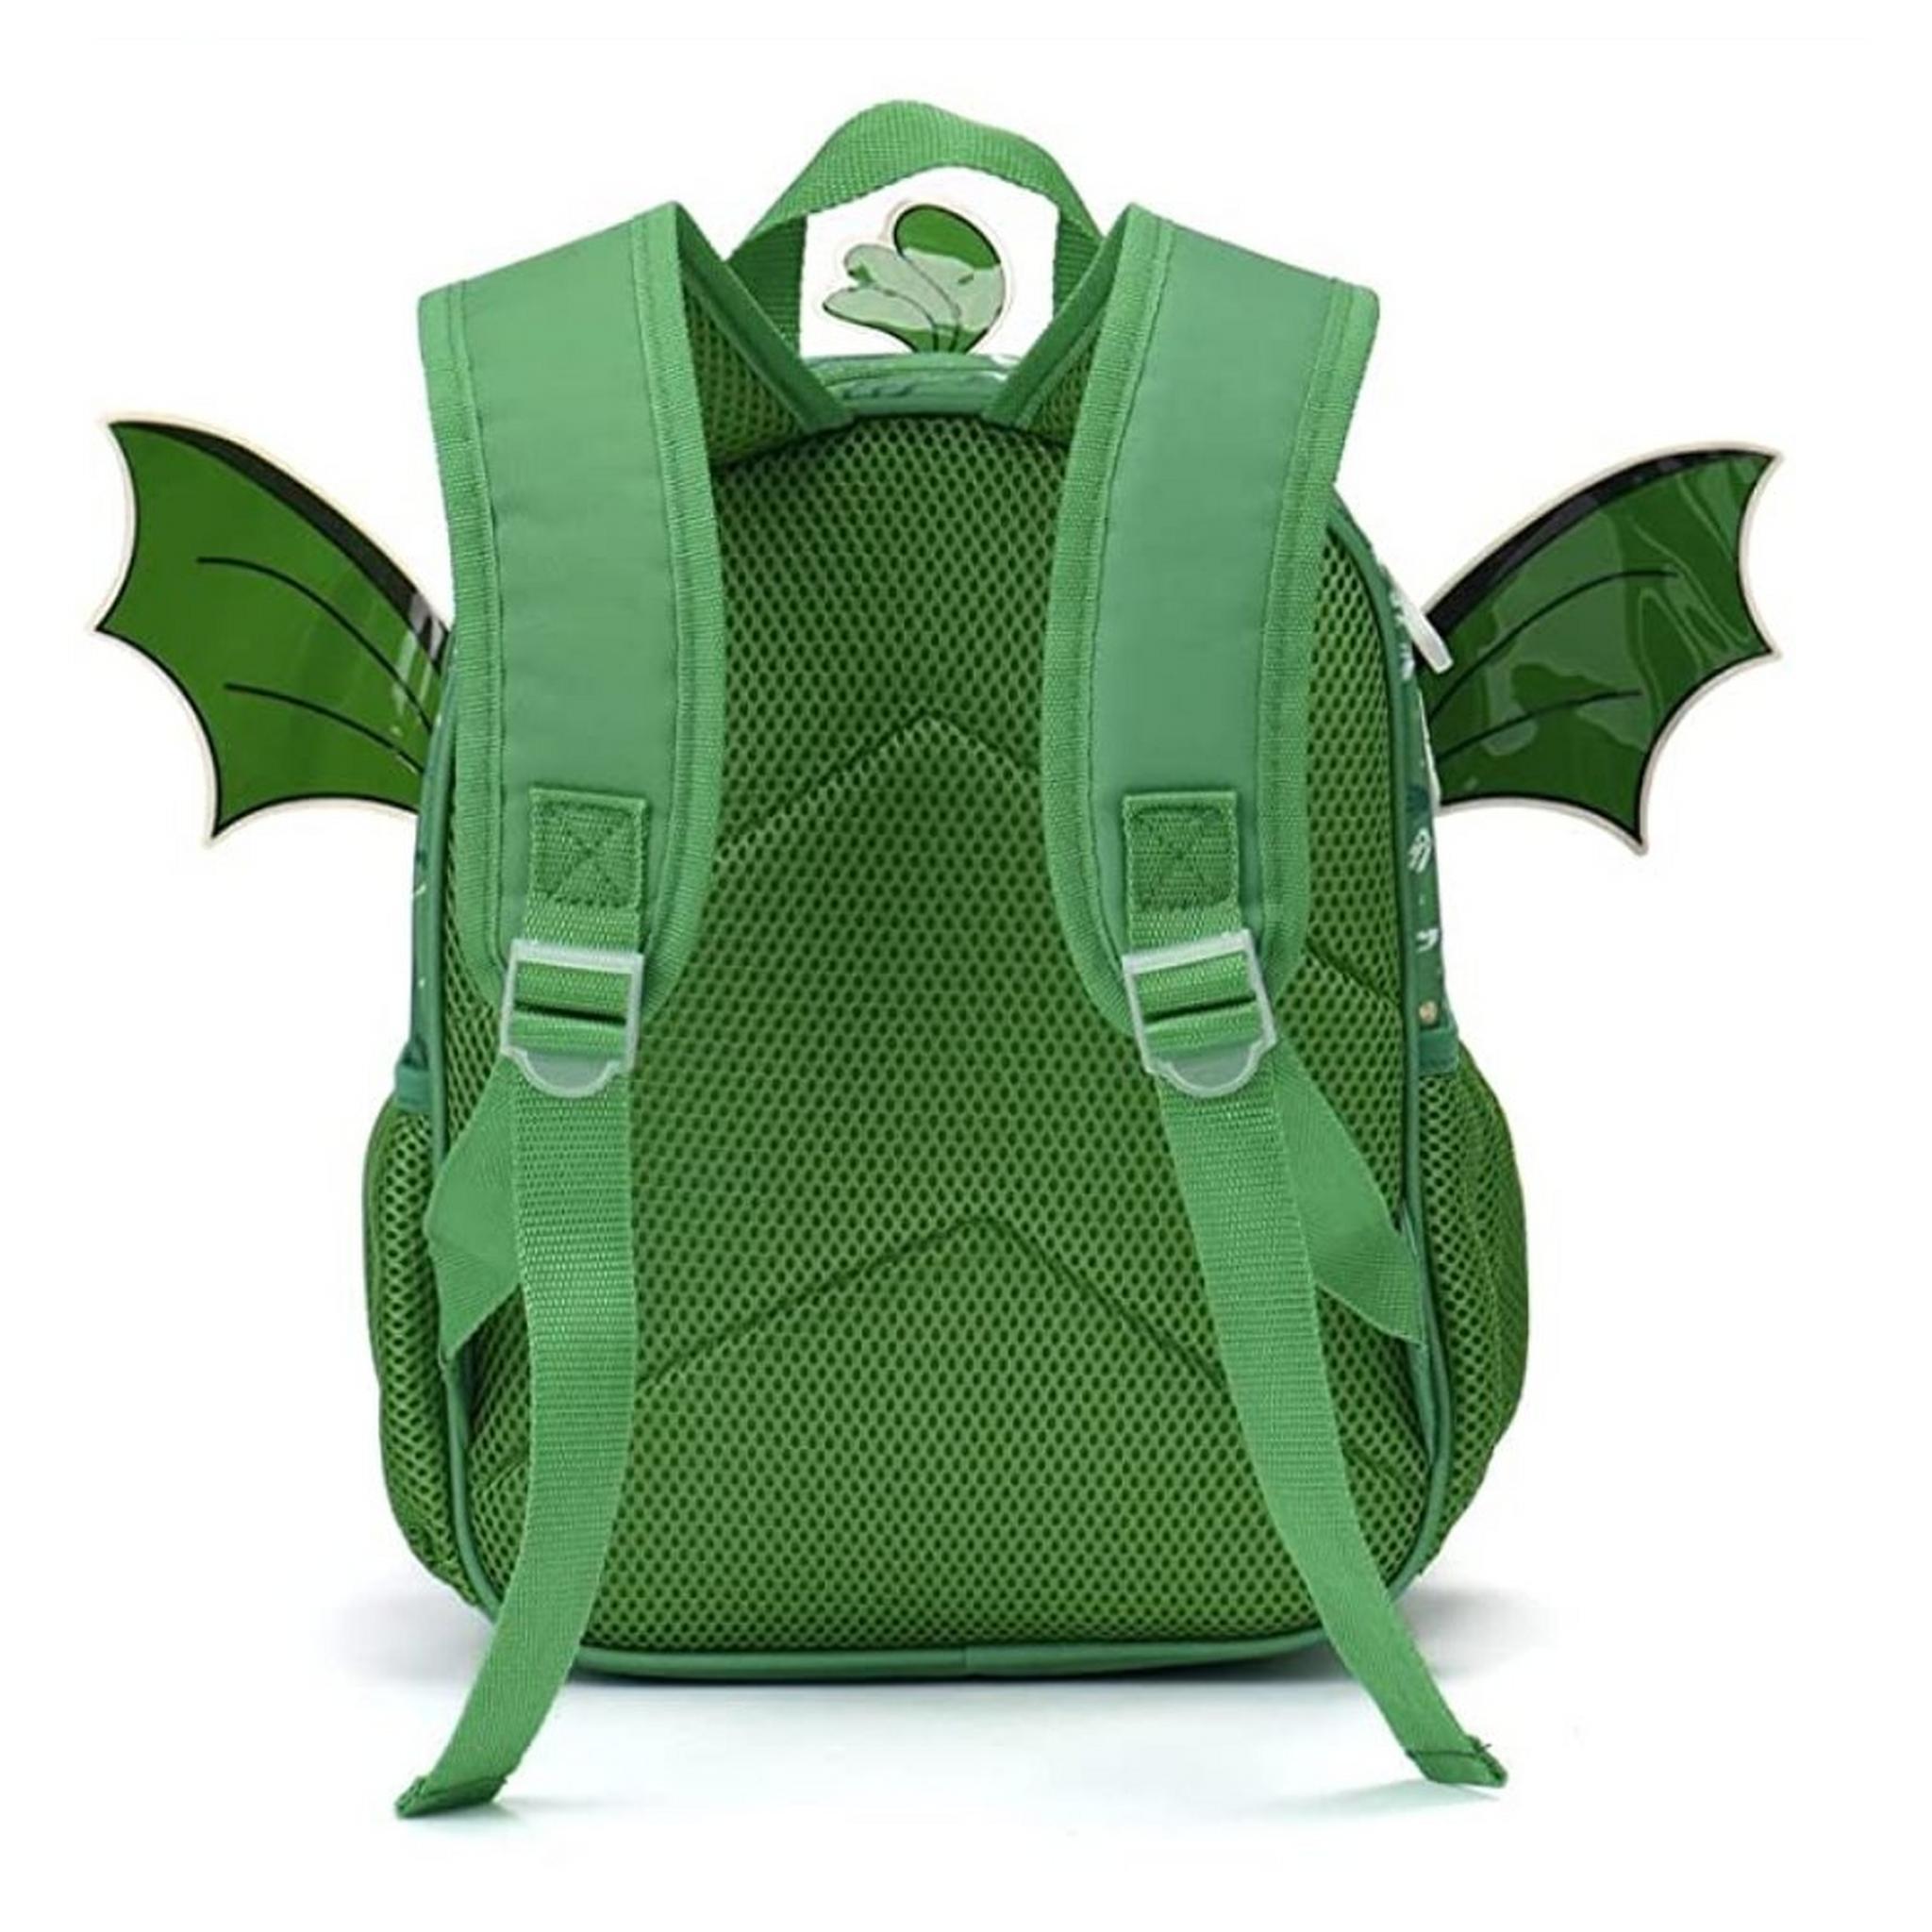 Riwbox Dragon Backpack - Green